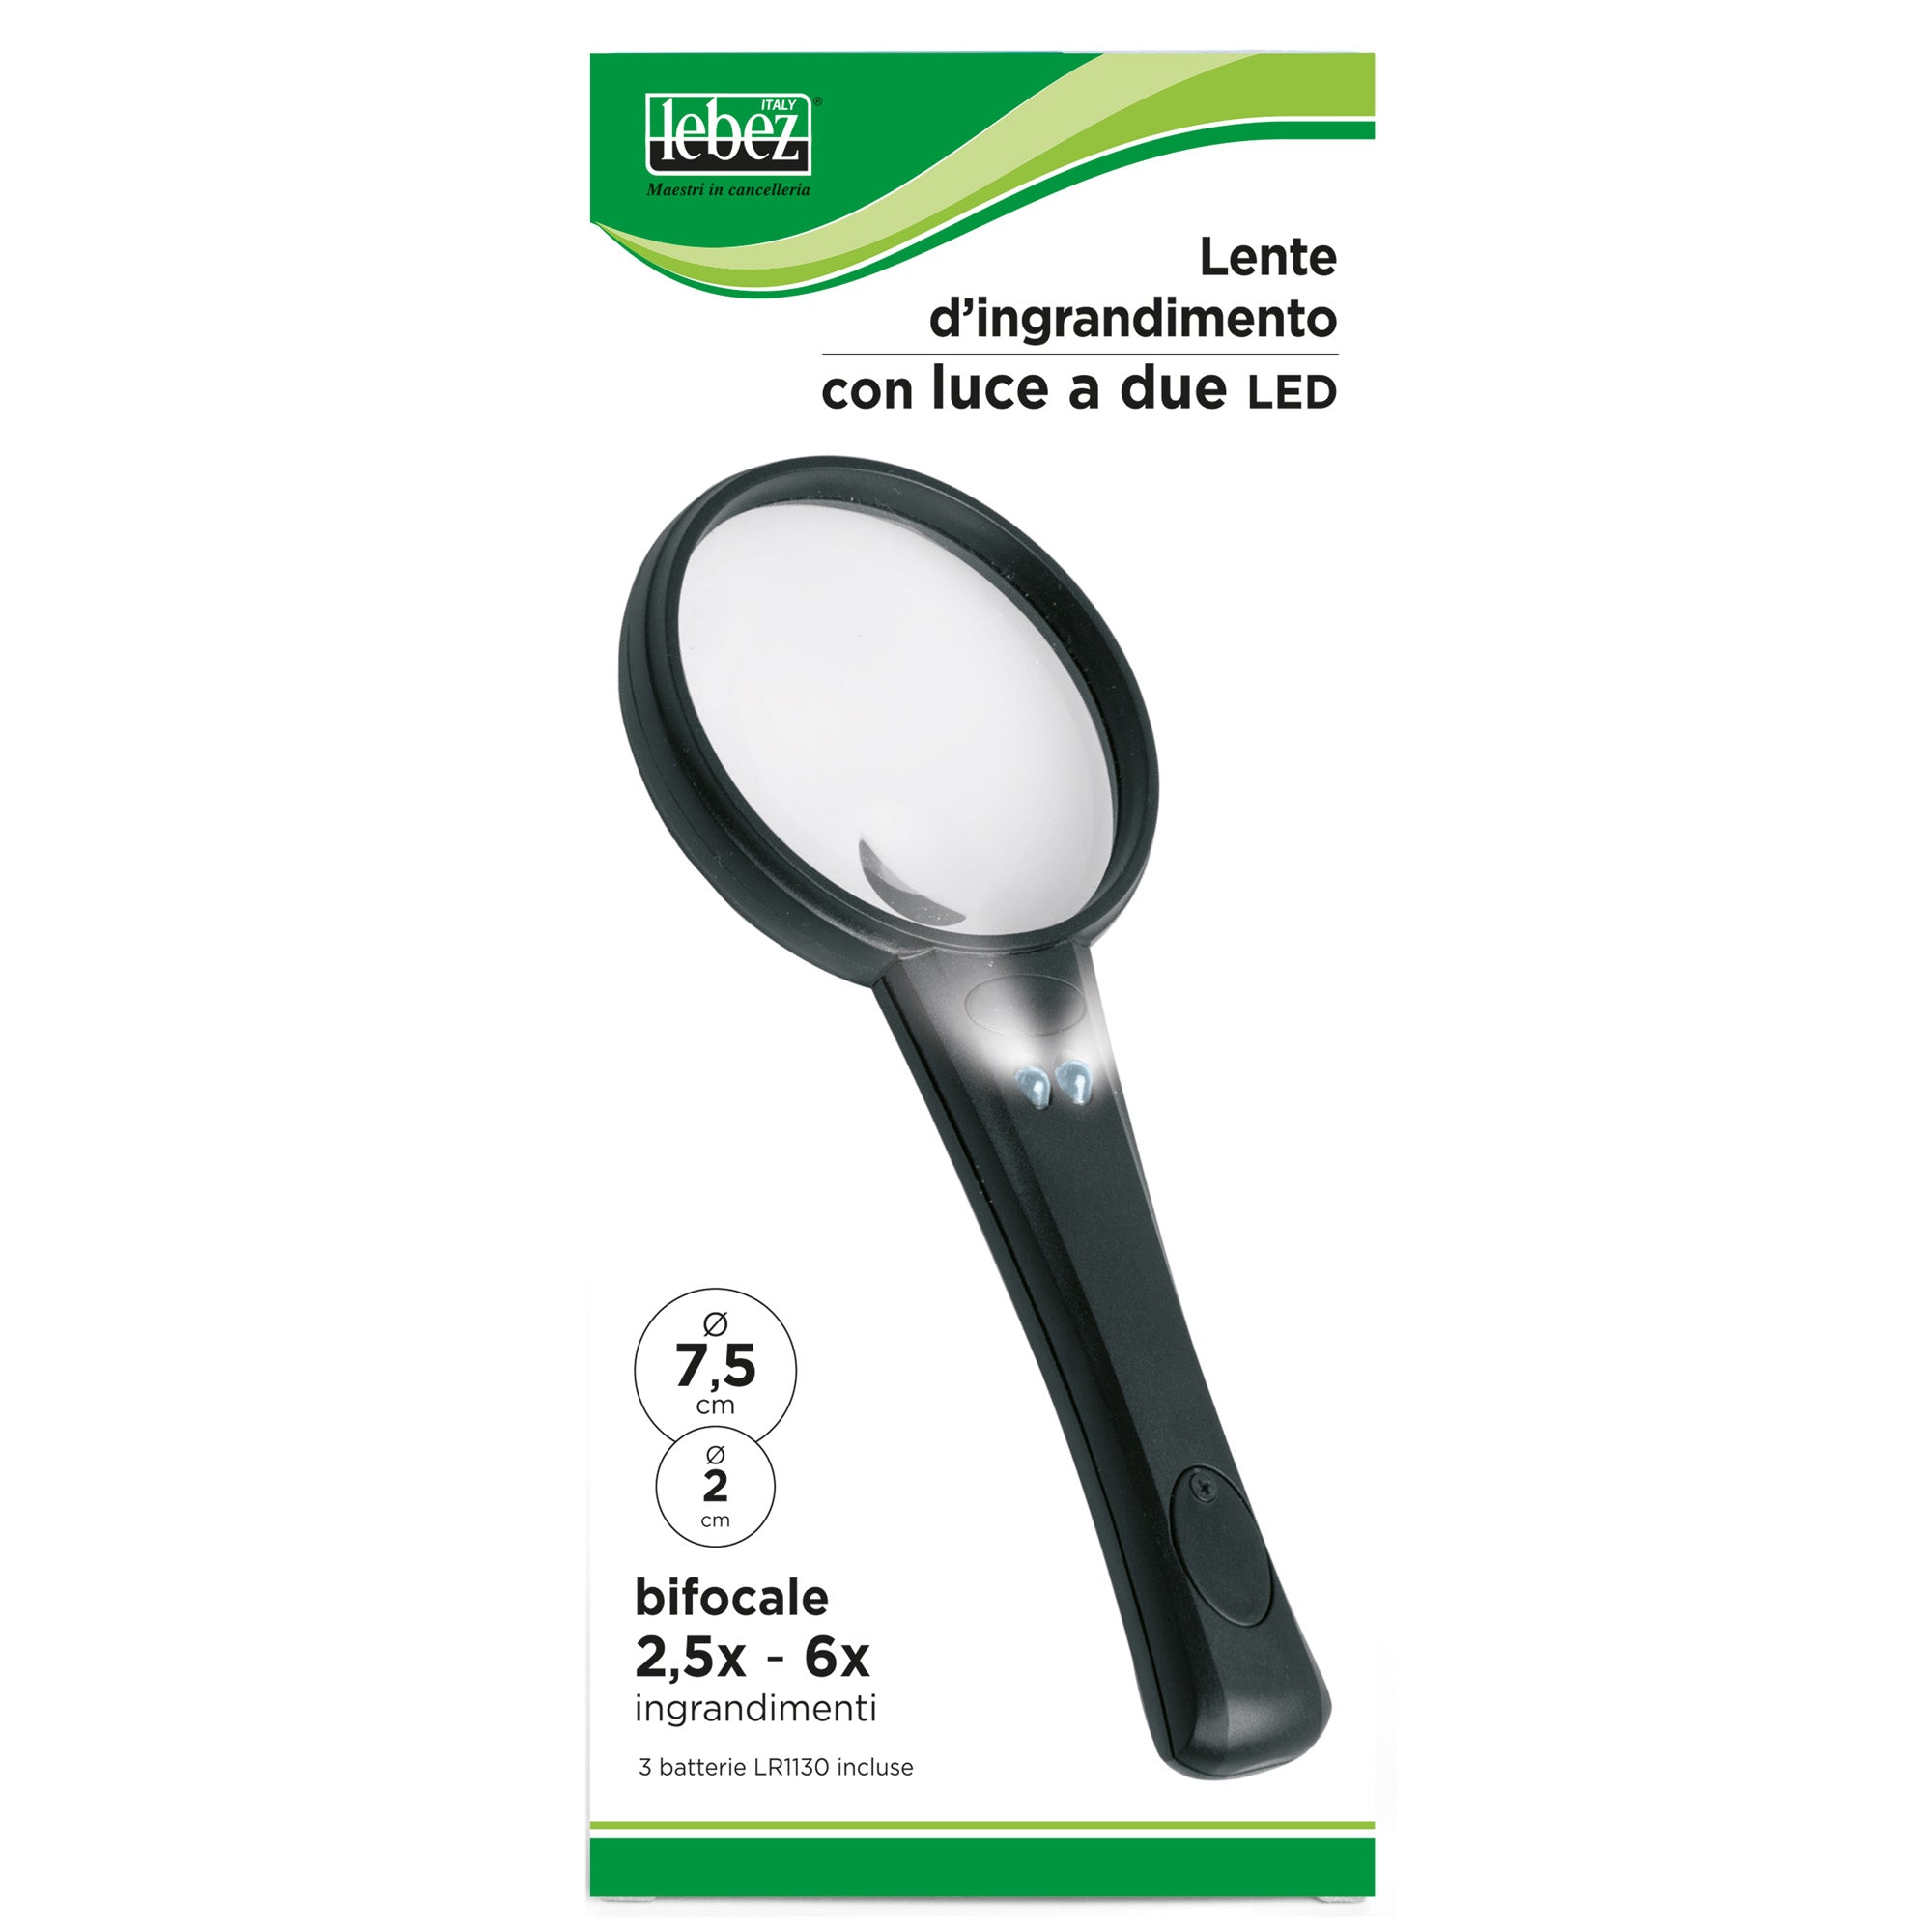 lebez-lente-ingrandimento-diametro-7-5cm-led-1134